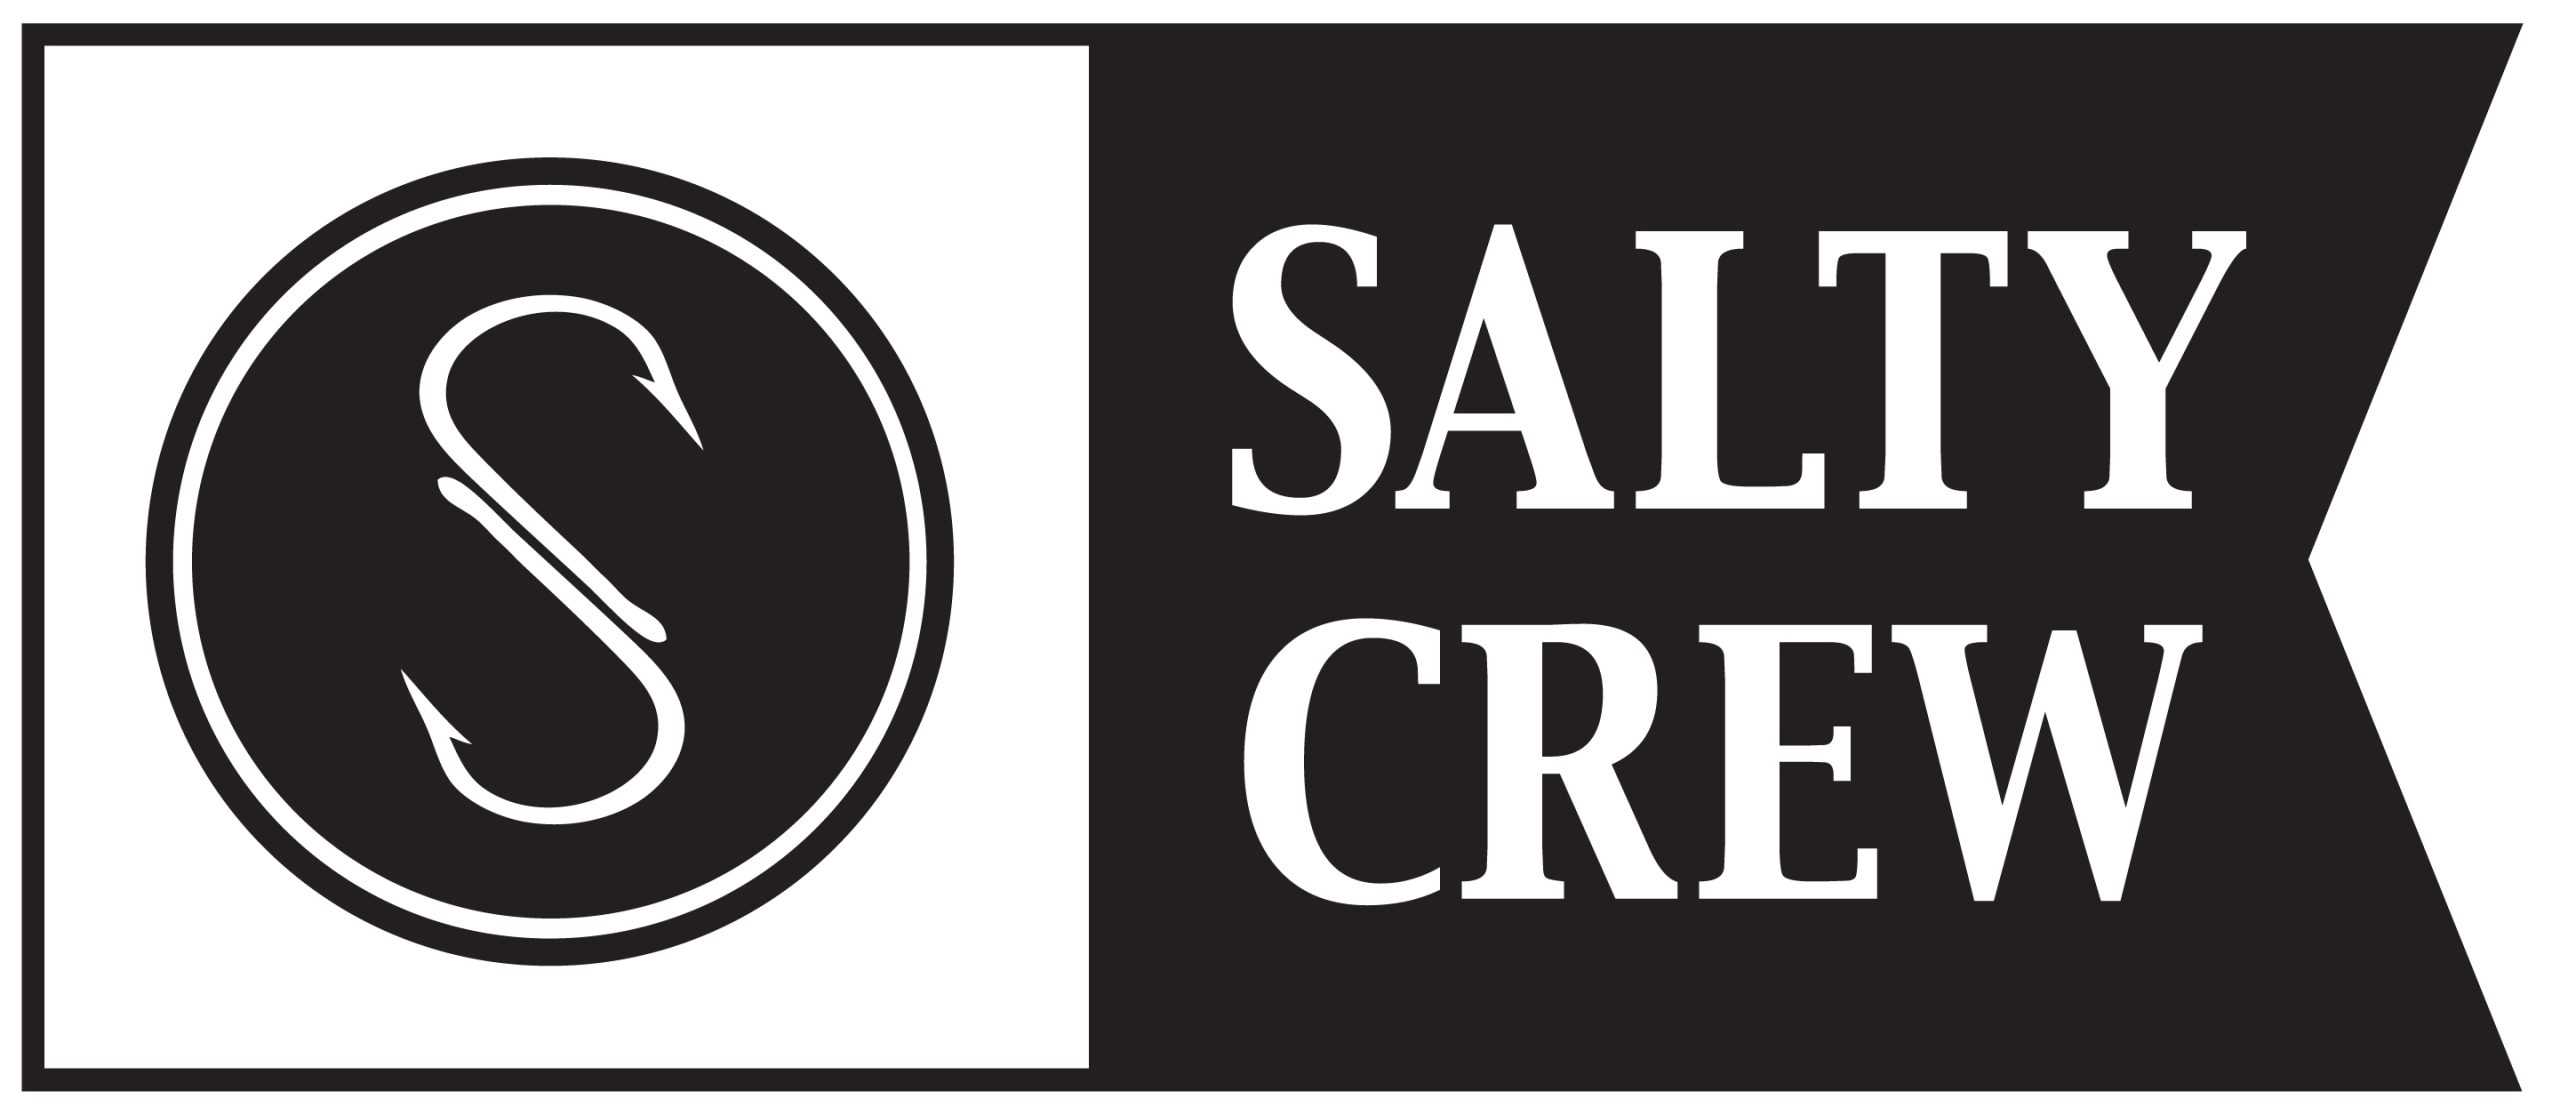 Salty Crew logo